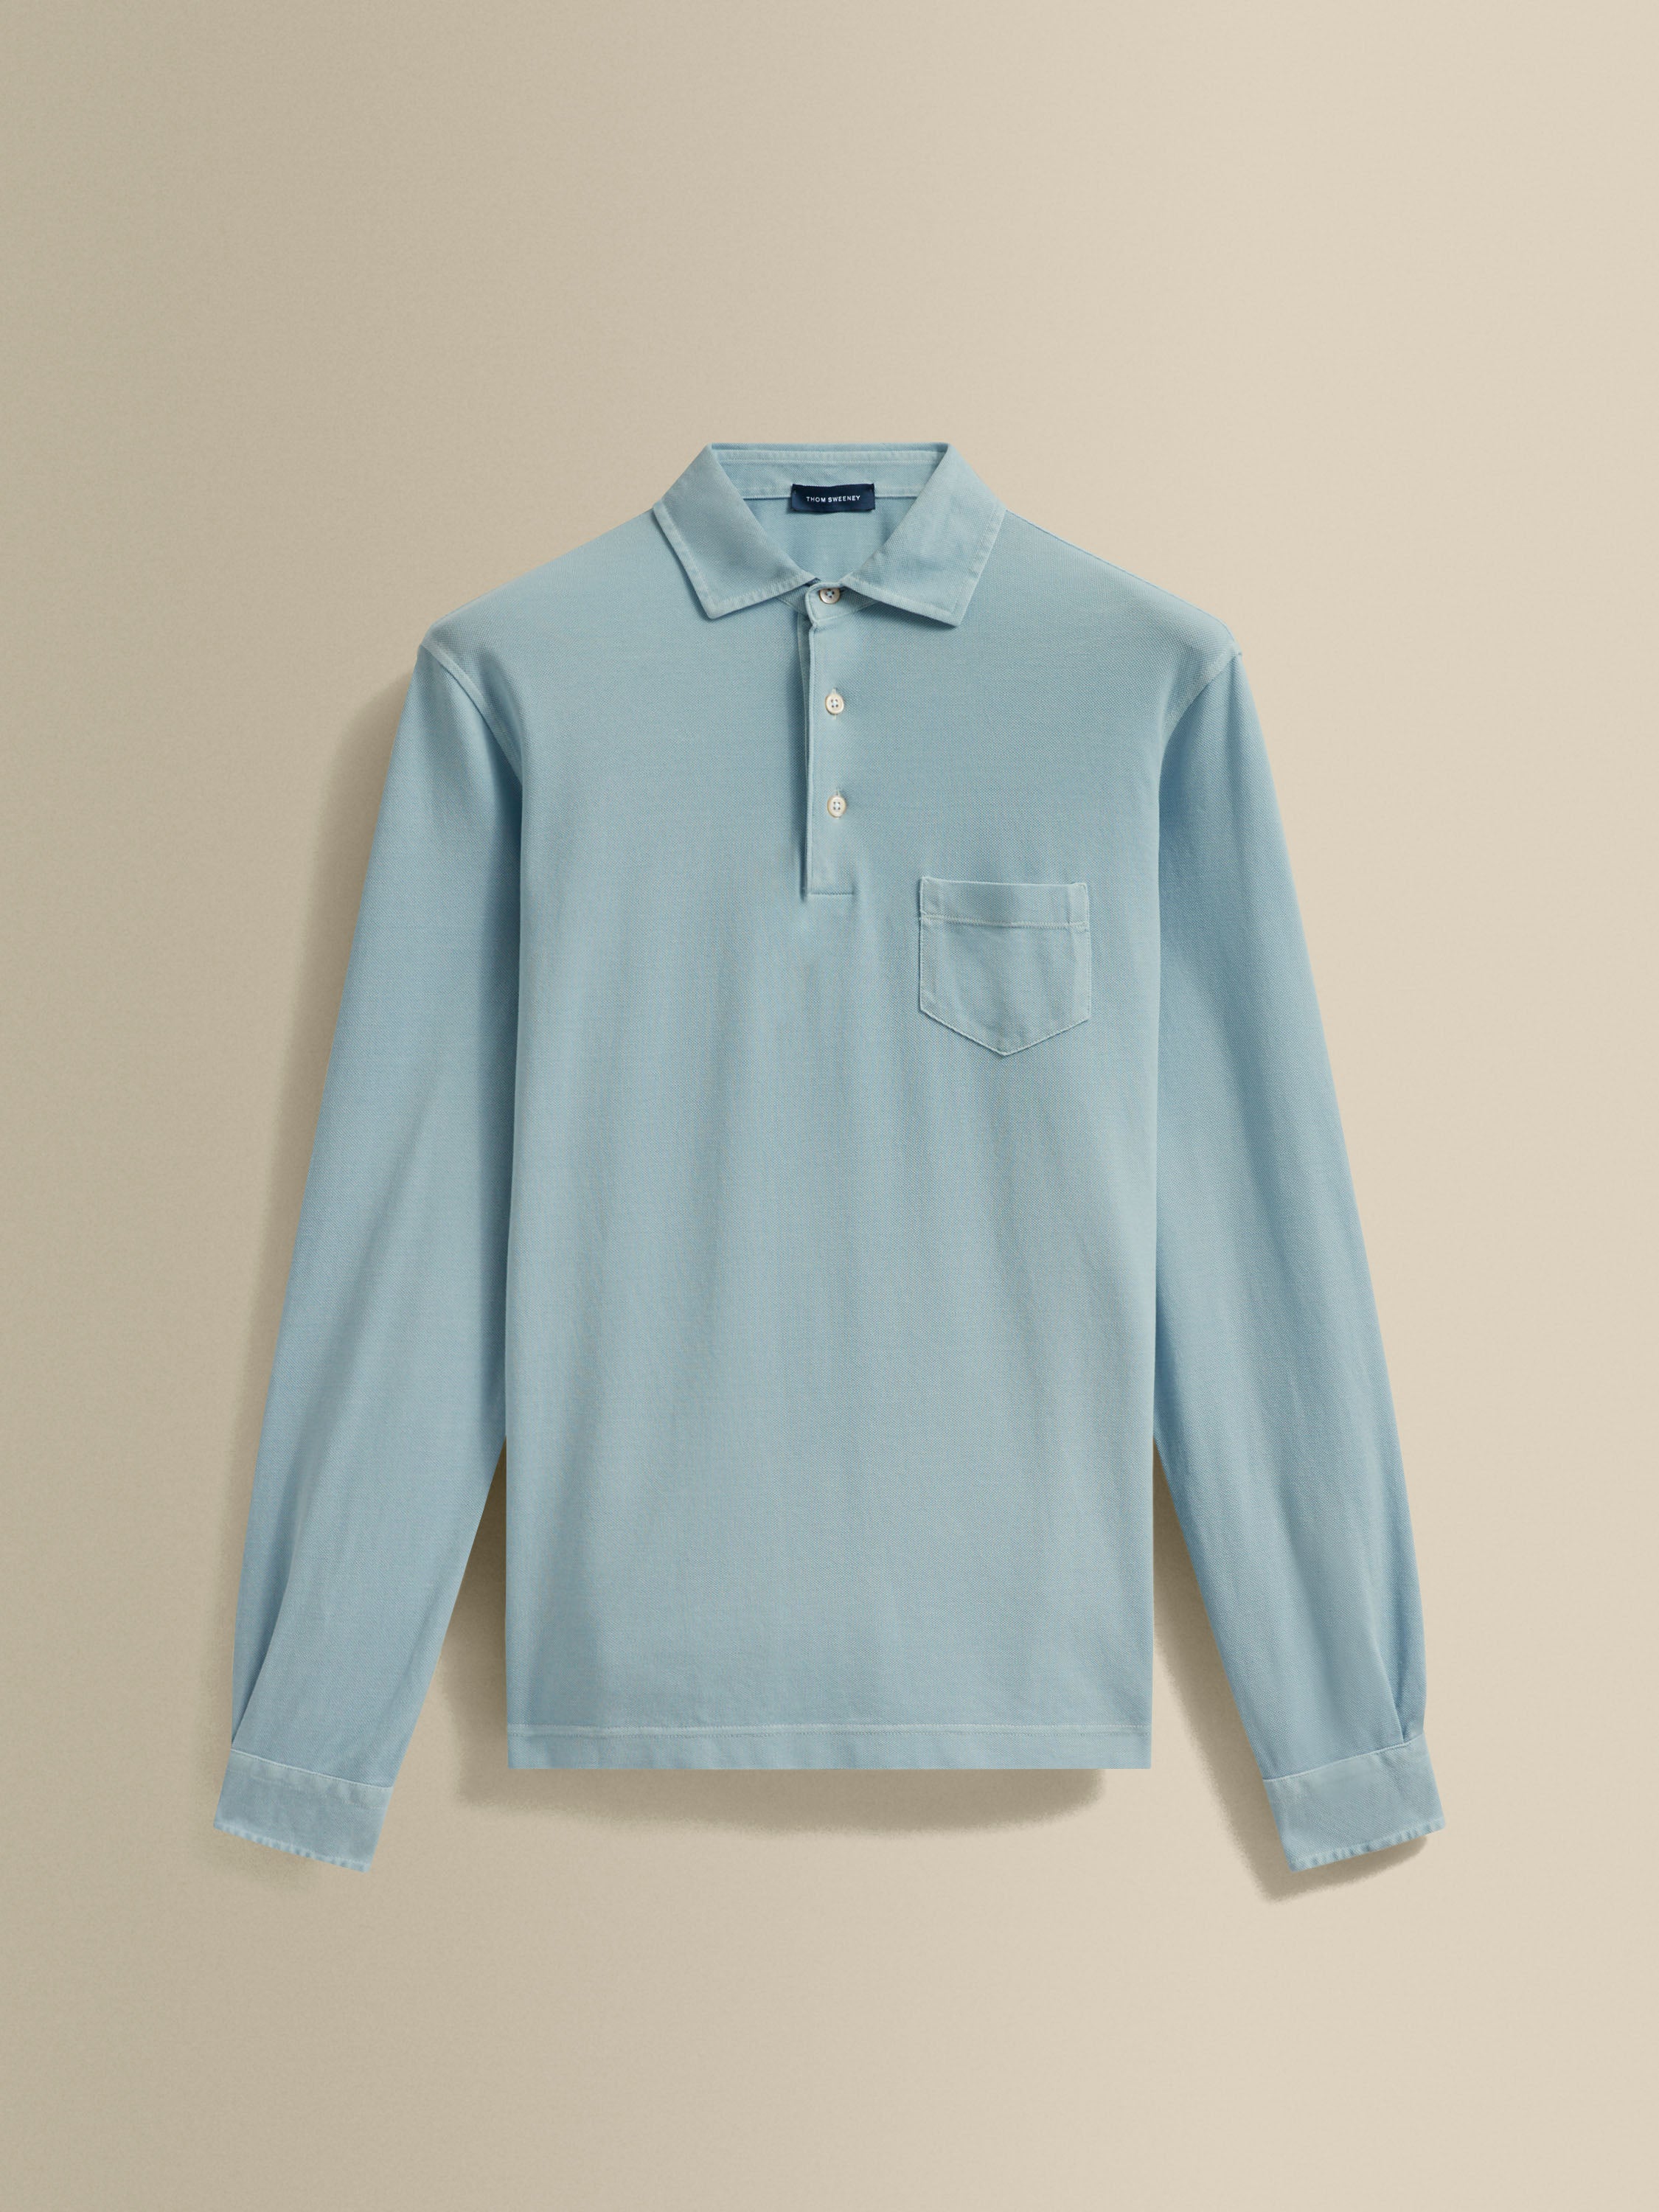 Cotton Pique Long Sleeve Polo Shirt Light Blue Product Image